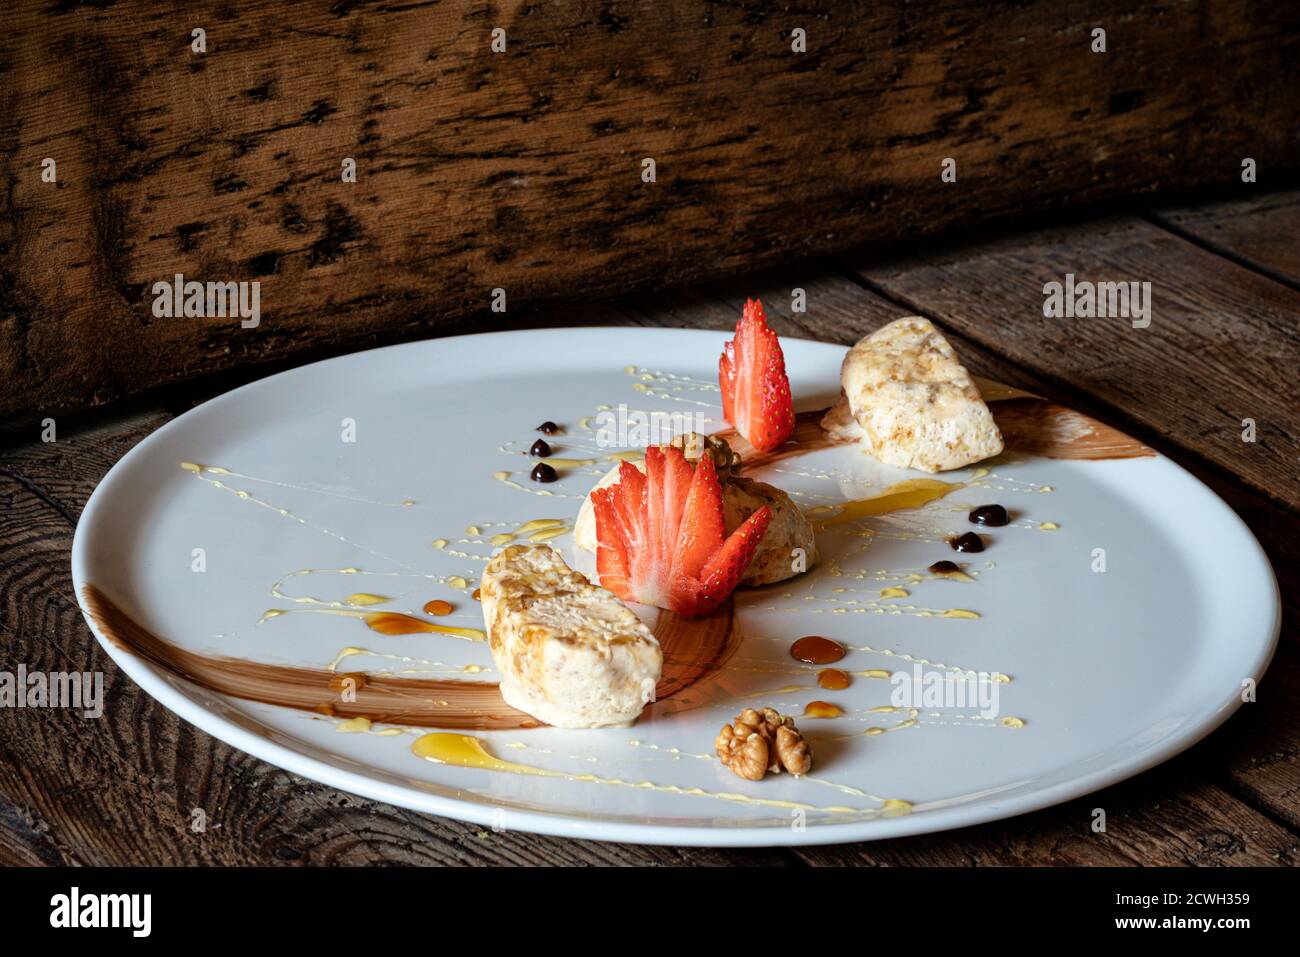 Italian torroncino semifreddo dessert made of nougat garnished with strawberries and walnuts Stock Photo